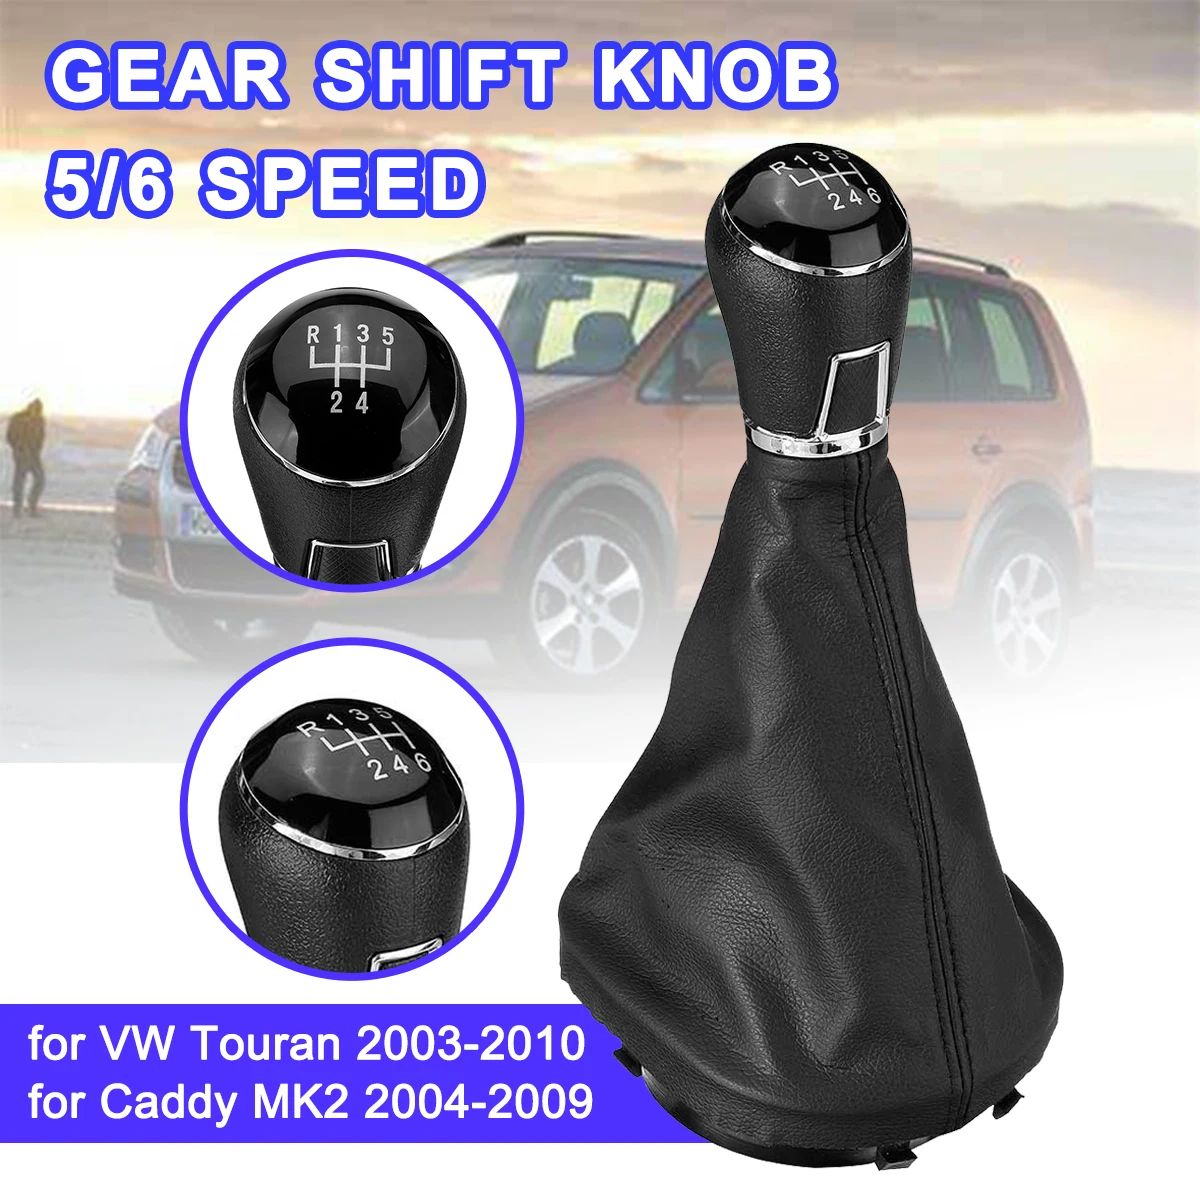 

5/6 Speed Gear Shift Knob Gearstick Gaiter Boot Unique Stylish For VW Touran 2003-2010 Caddy MK2 2004 2005 2006 2007 2008 2009